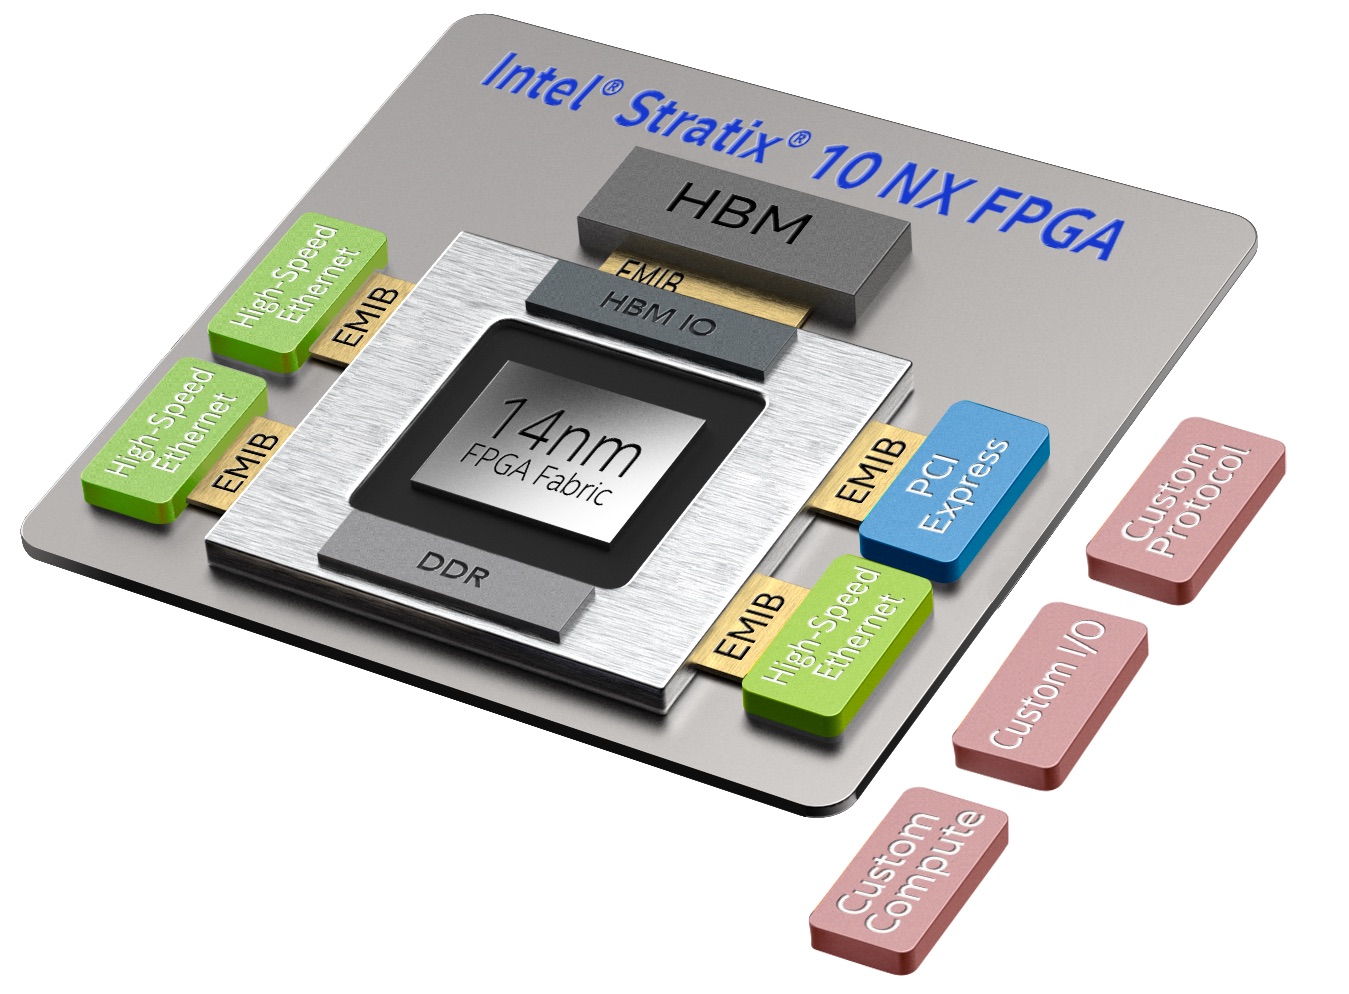 Intel Stratix 10 NX FPGA